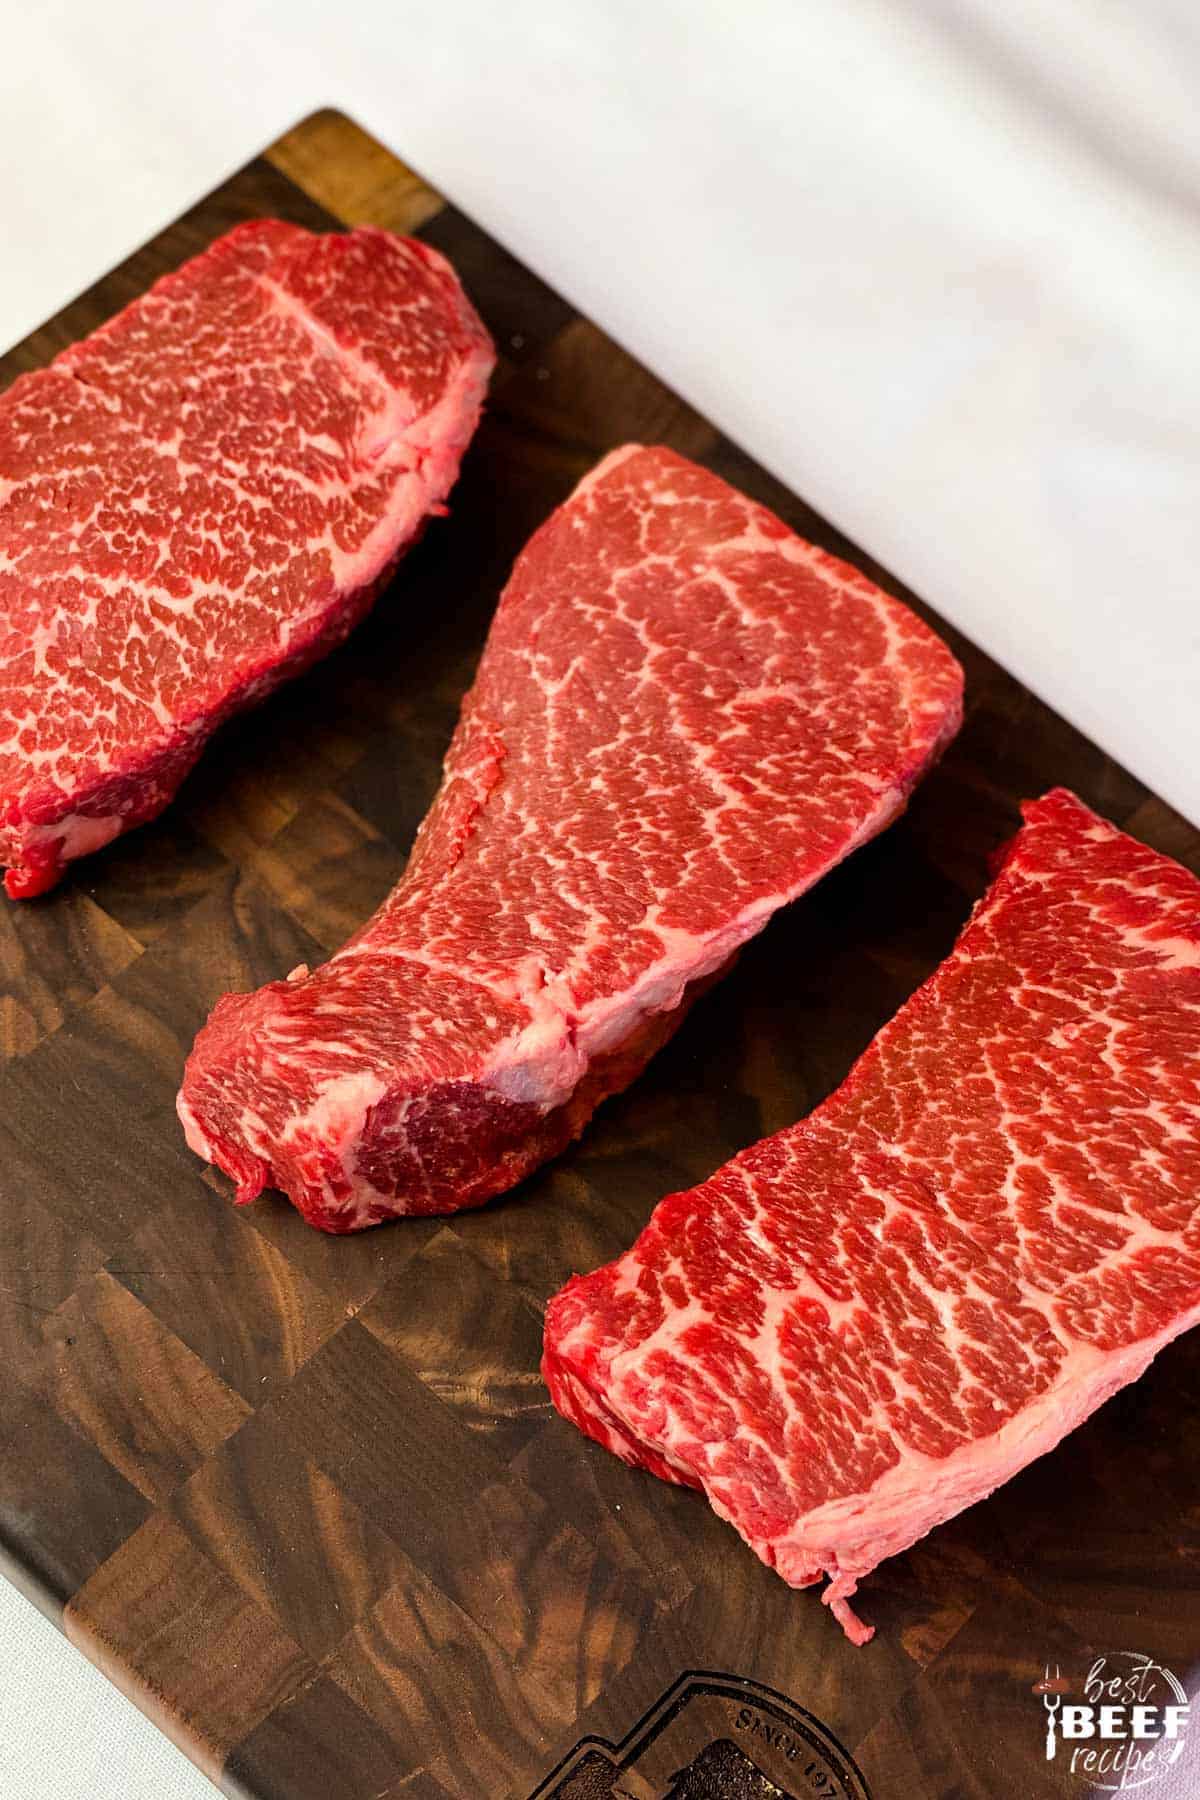 Three beef short ribs on a cutting board